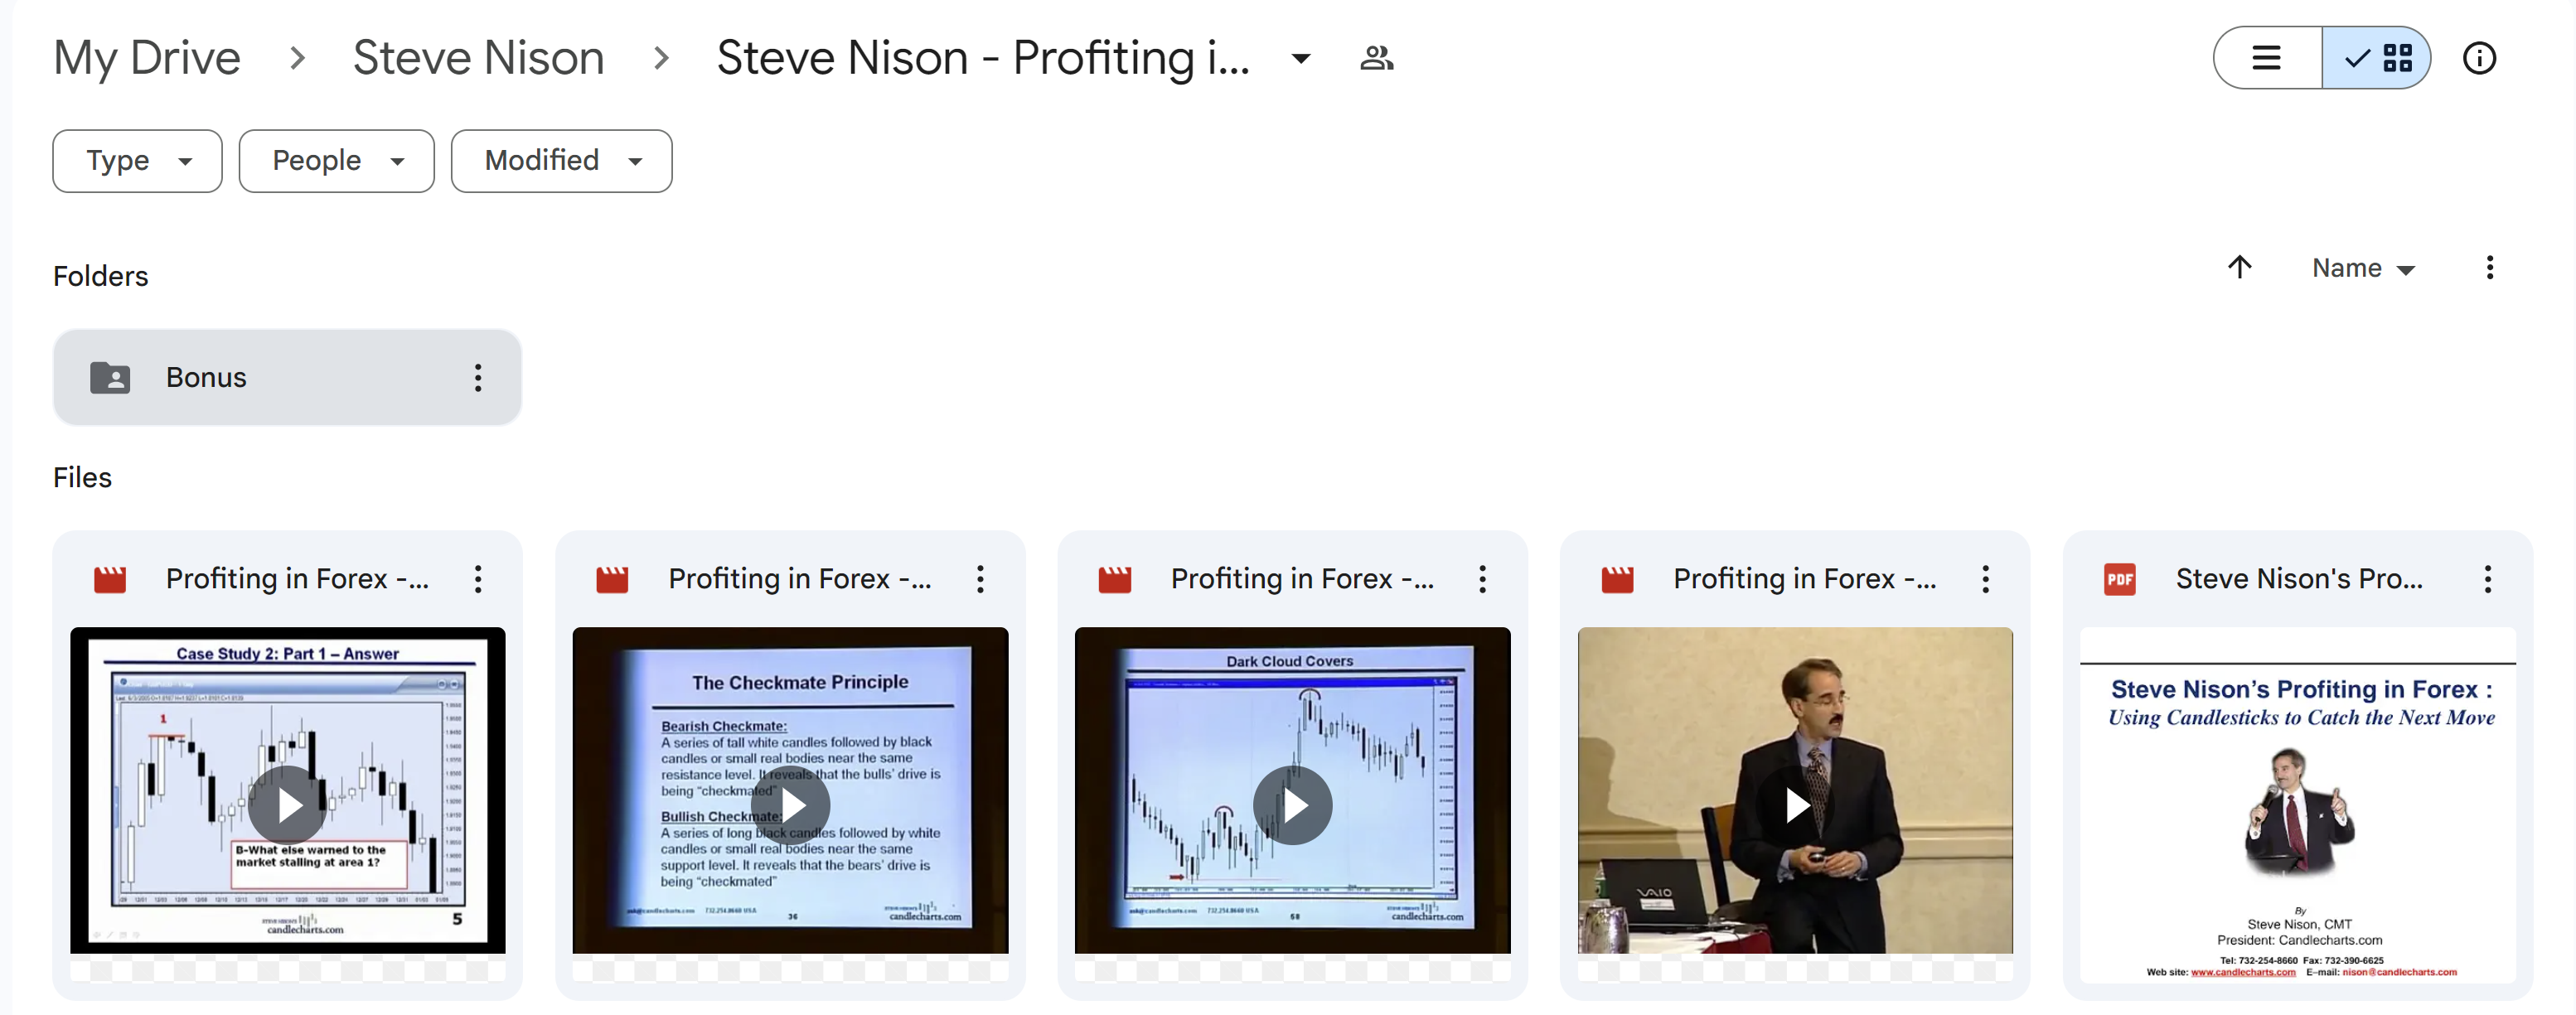 Steve Nison - Profiting In Forex + Bonus